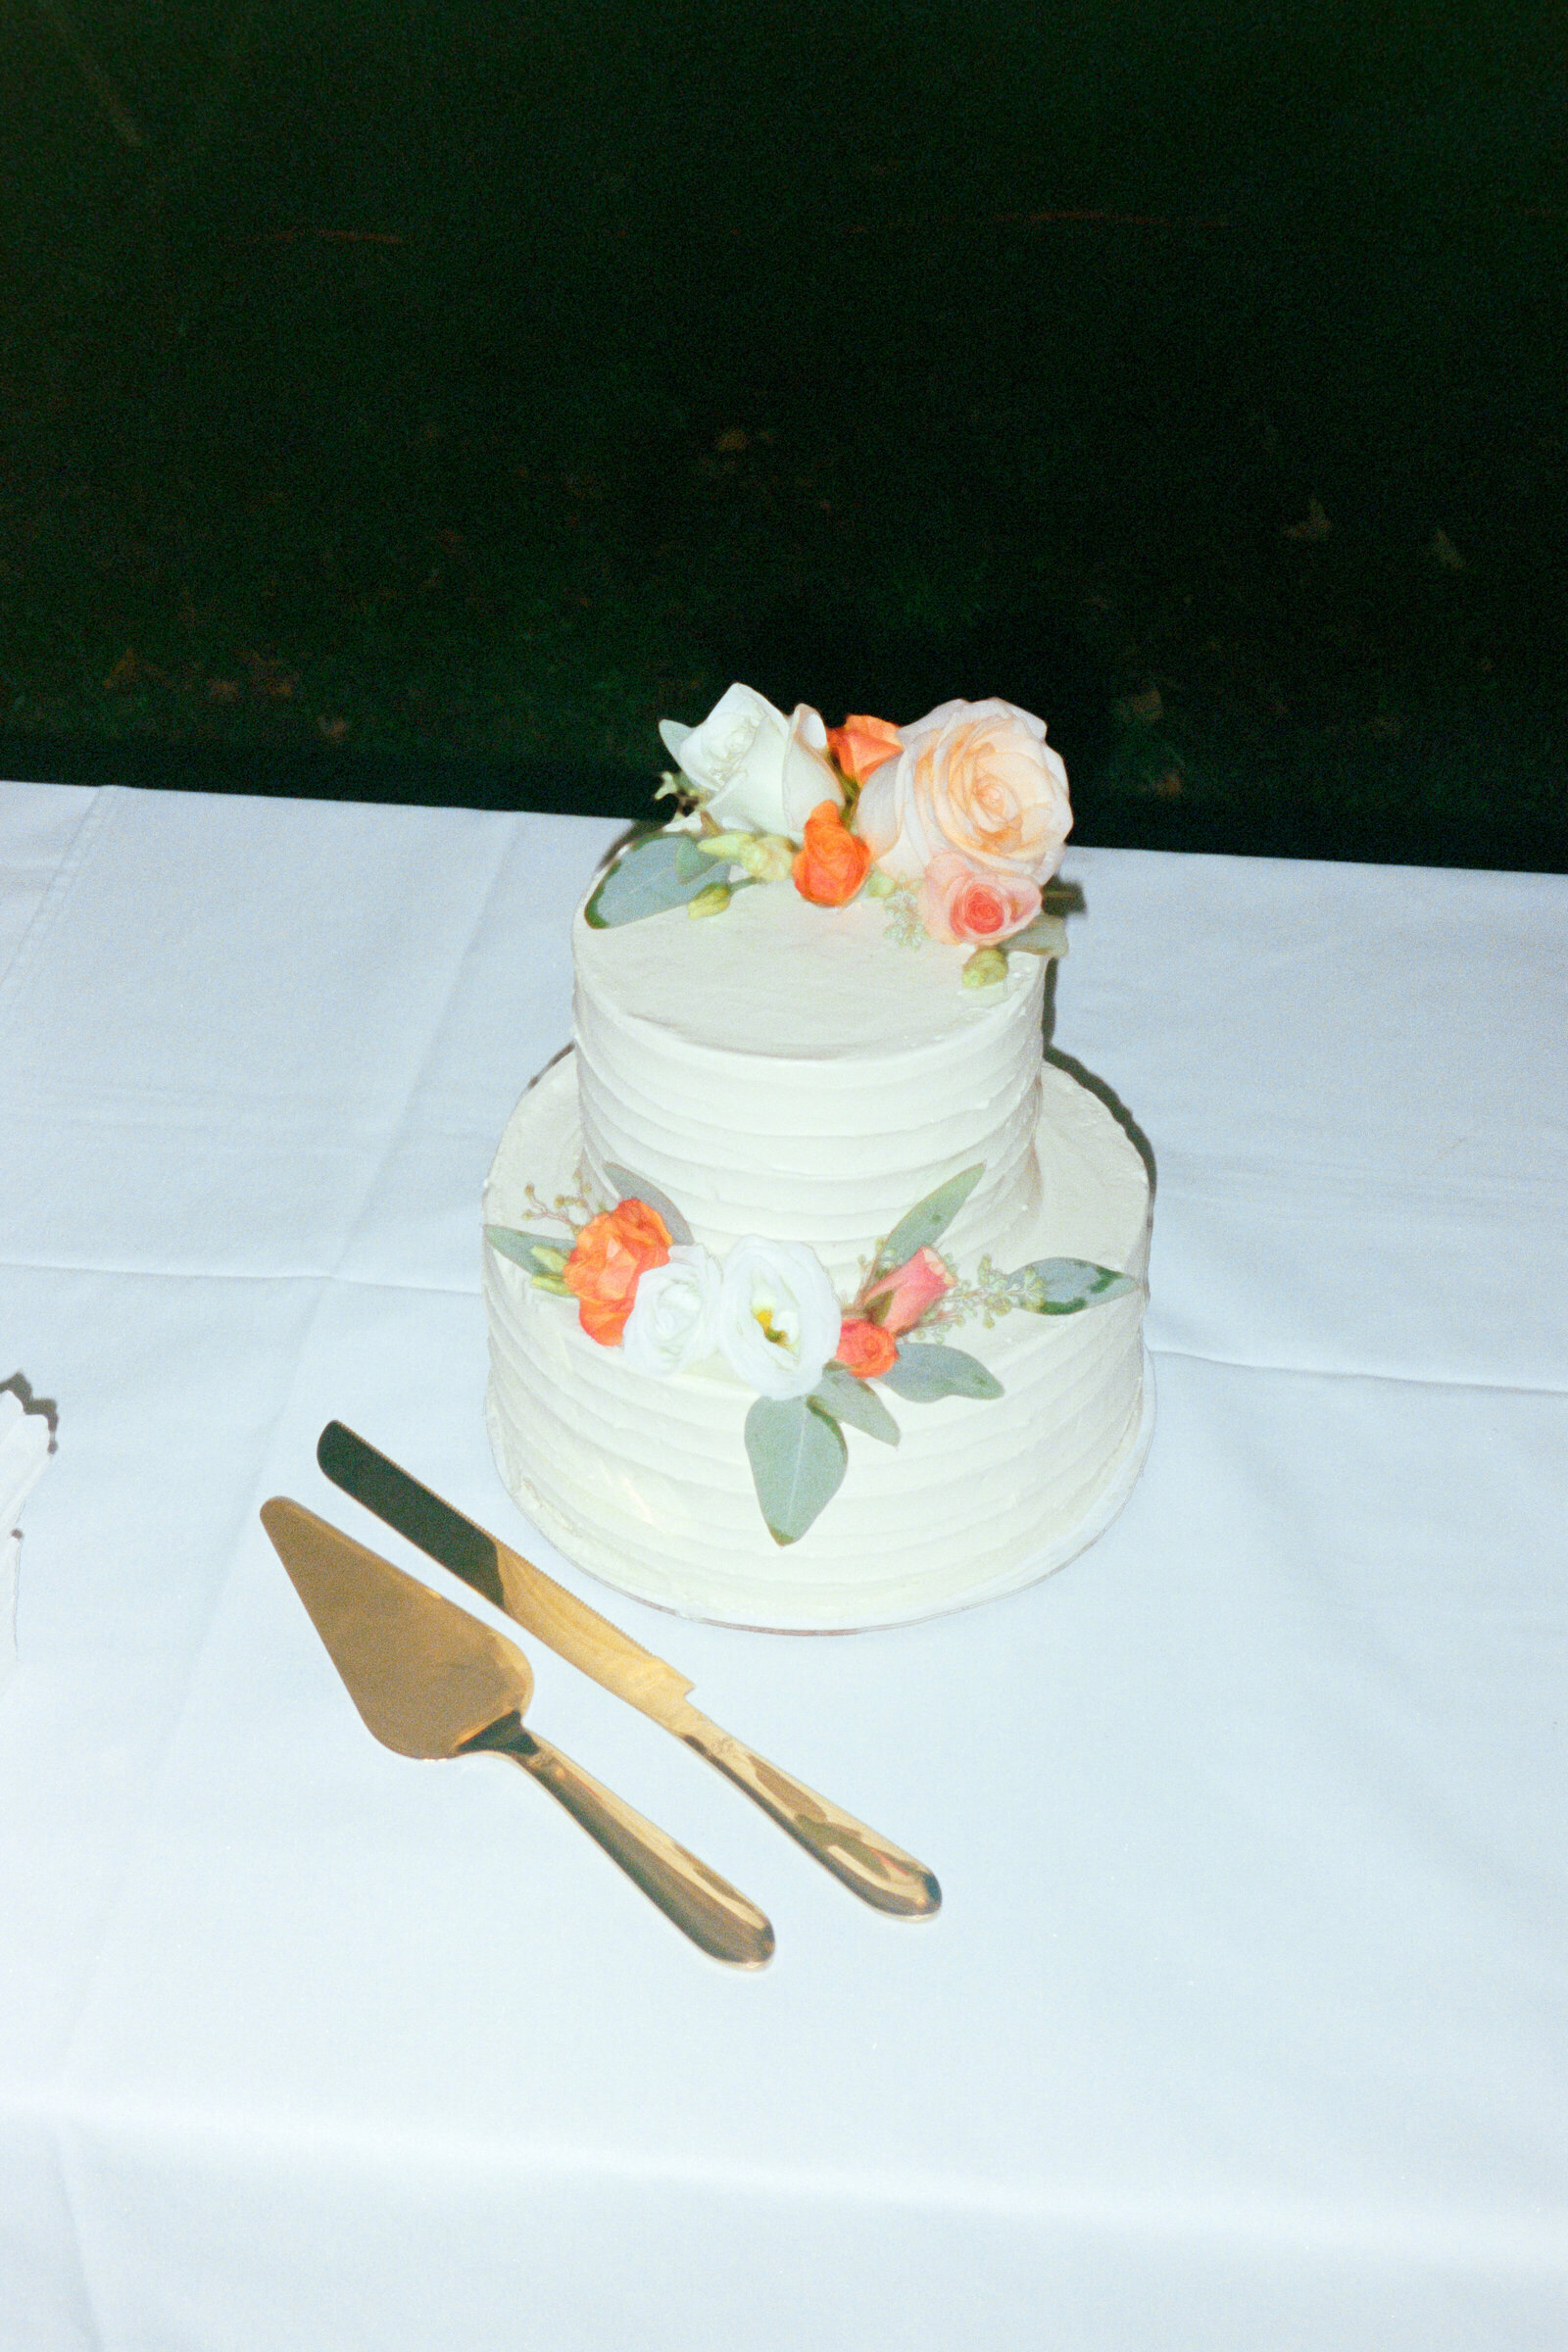 A wedding cake on a table